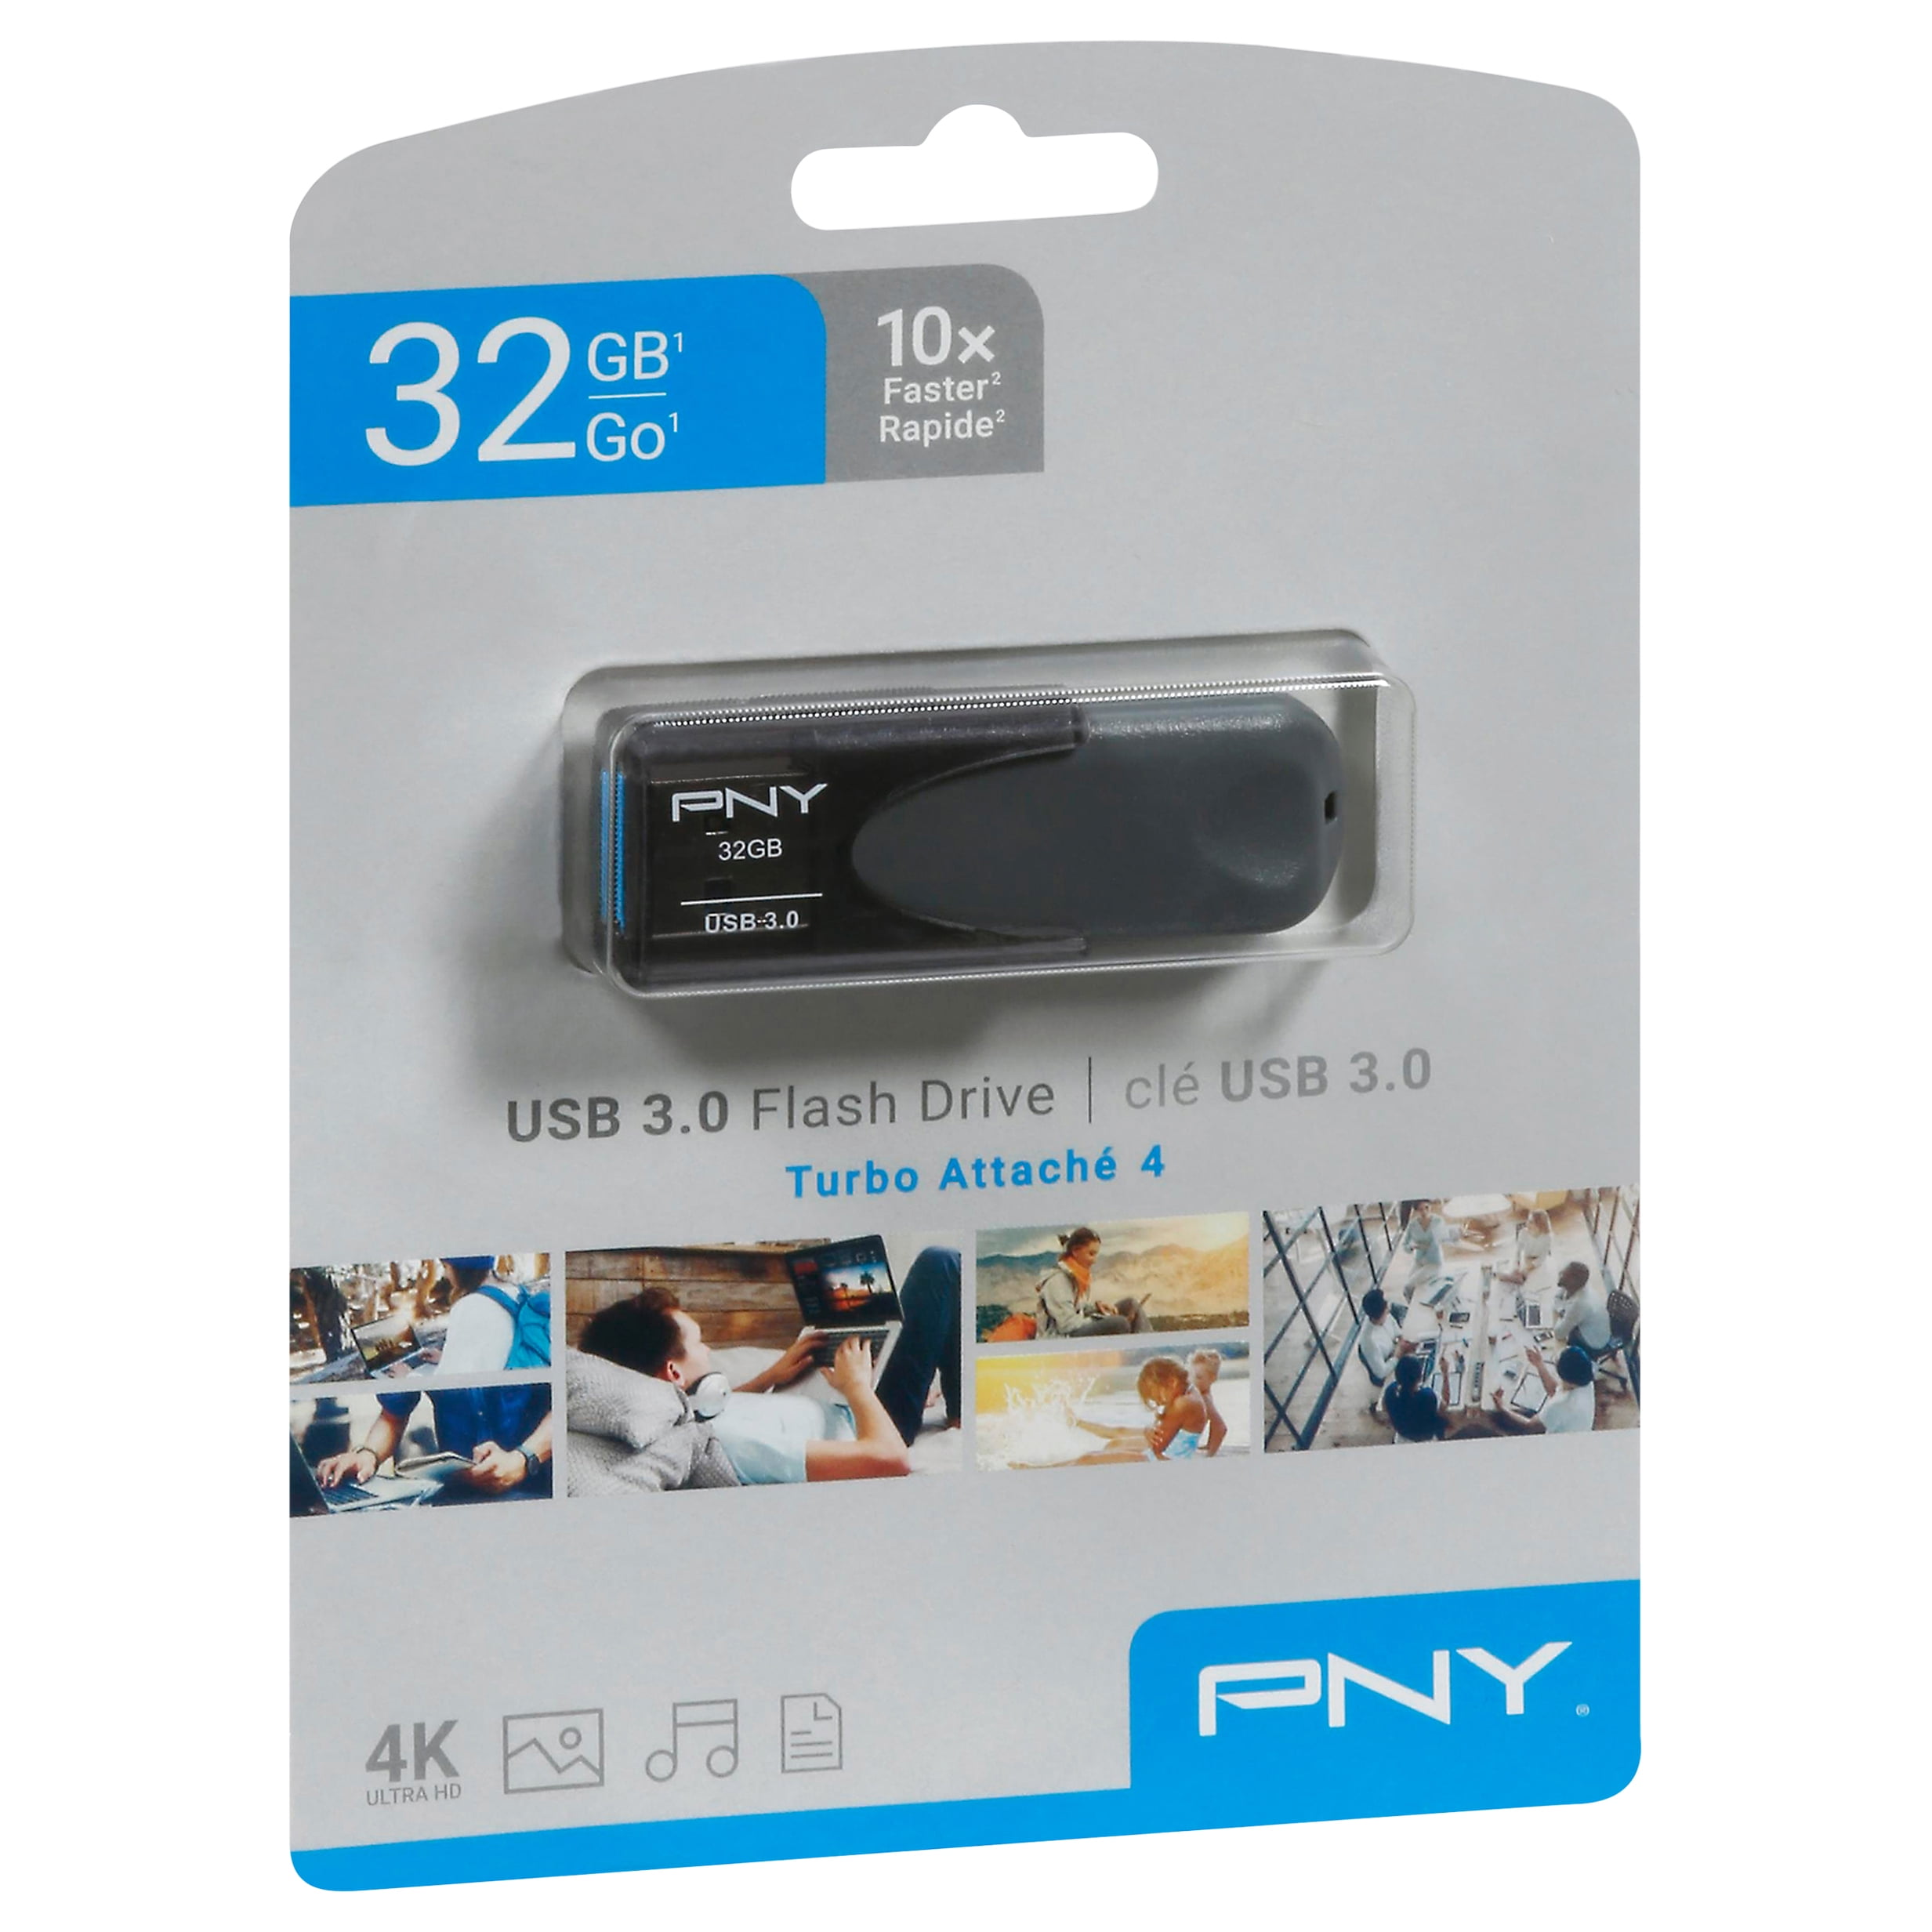 Tilpasning ankomme læser PNY Turbo Attache 4 USB 3.0 Flash Drive - Walmart.com